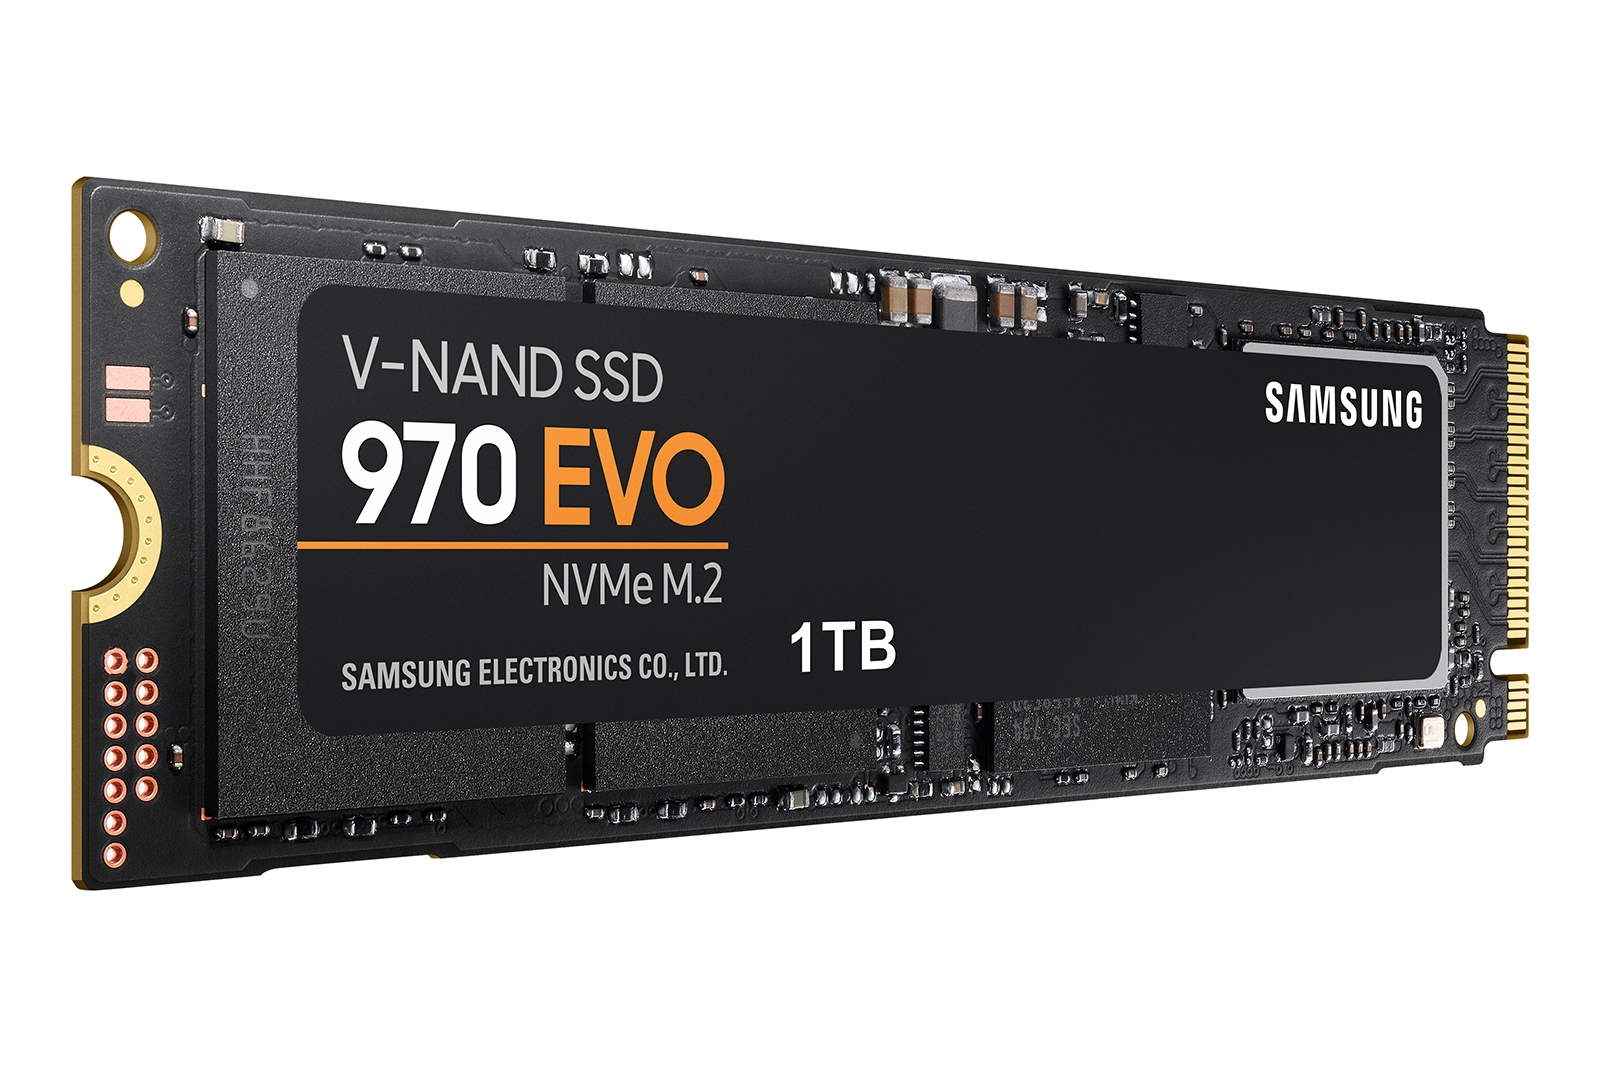 SSD 970 EVO Plus - 1 To (MZ-V7S1T0BW)